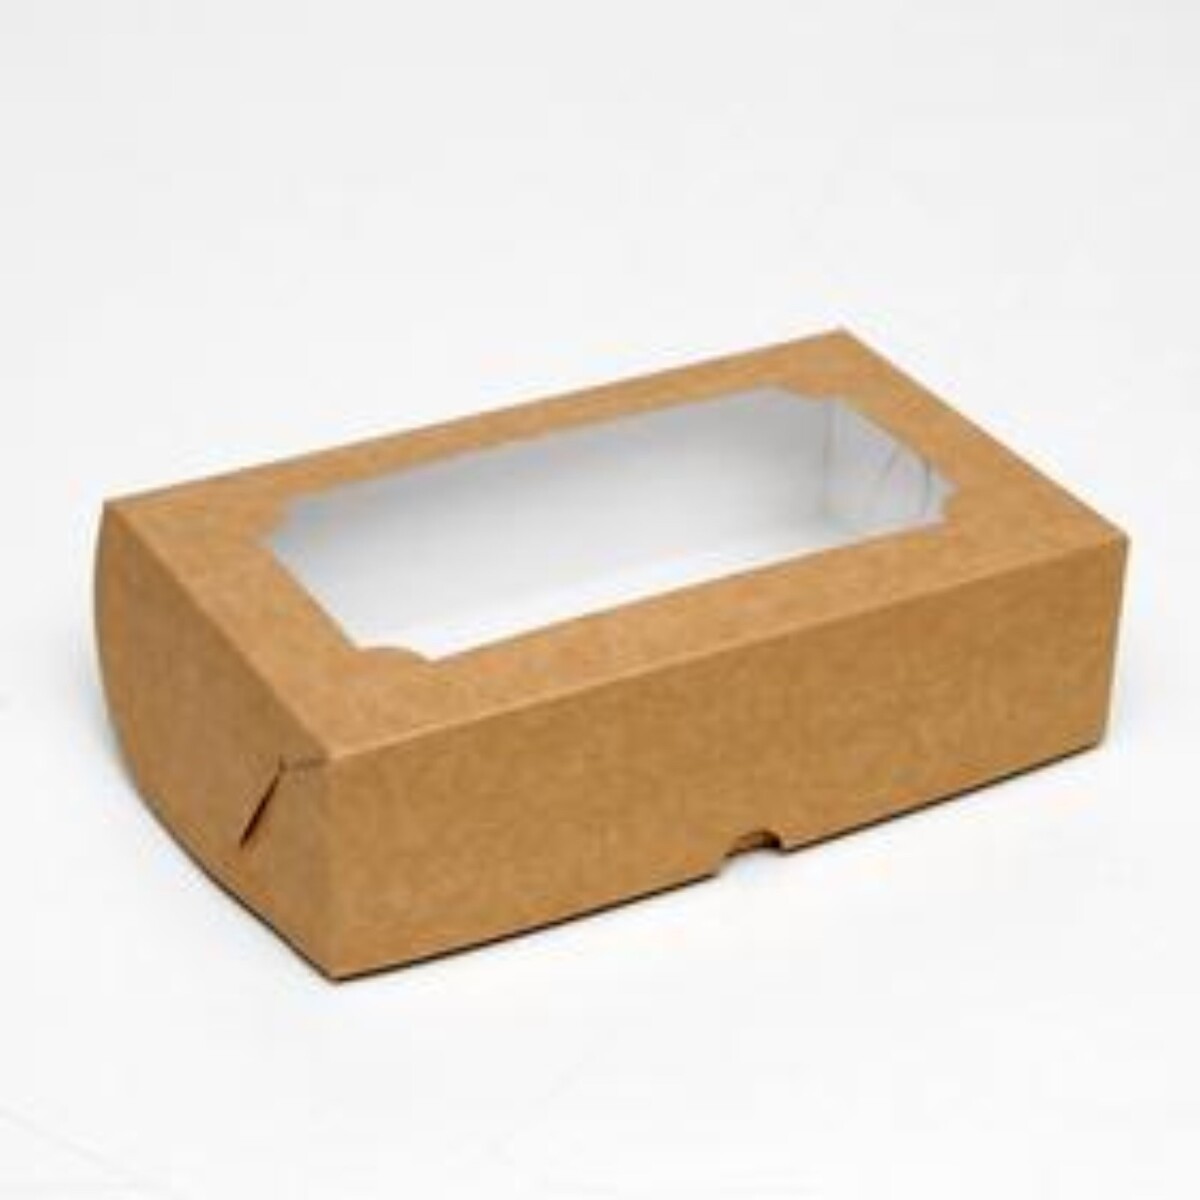 Коробка складная с окном под зефир, крафт, 25 х 15 х 7 см коробка складная под 4 конфеты с окном крафт 12 6 х 12 6 х 3 5 см